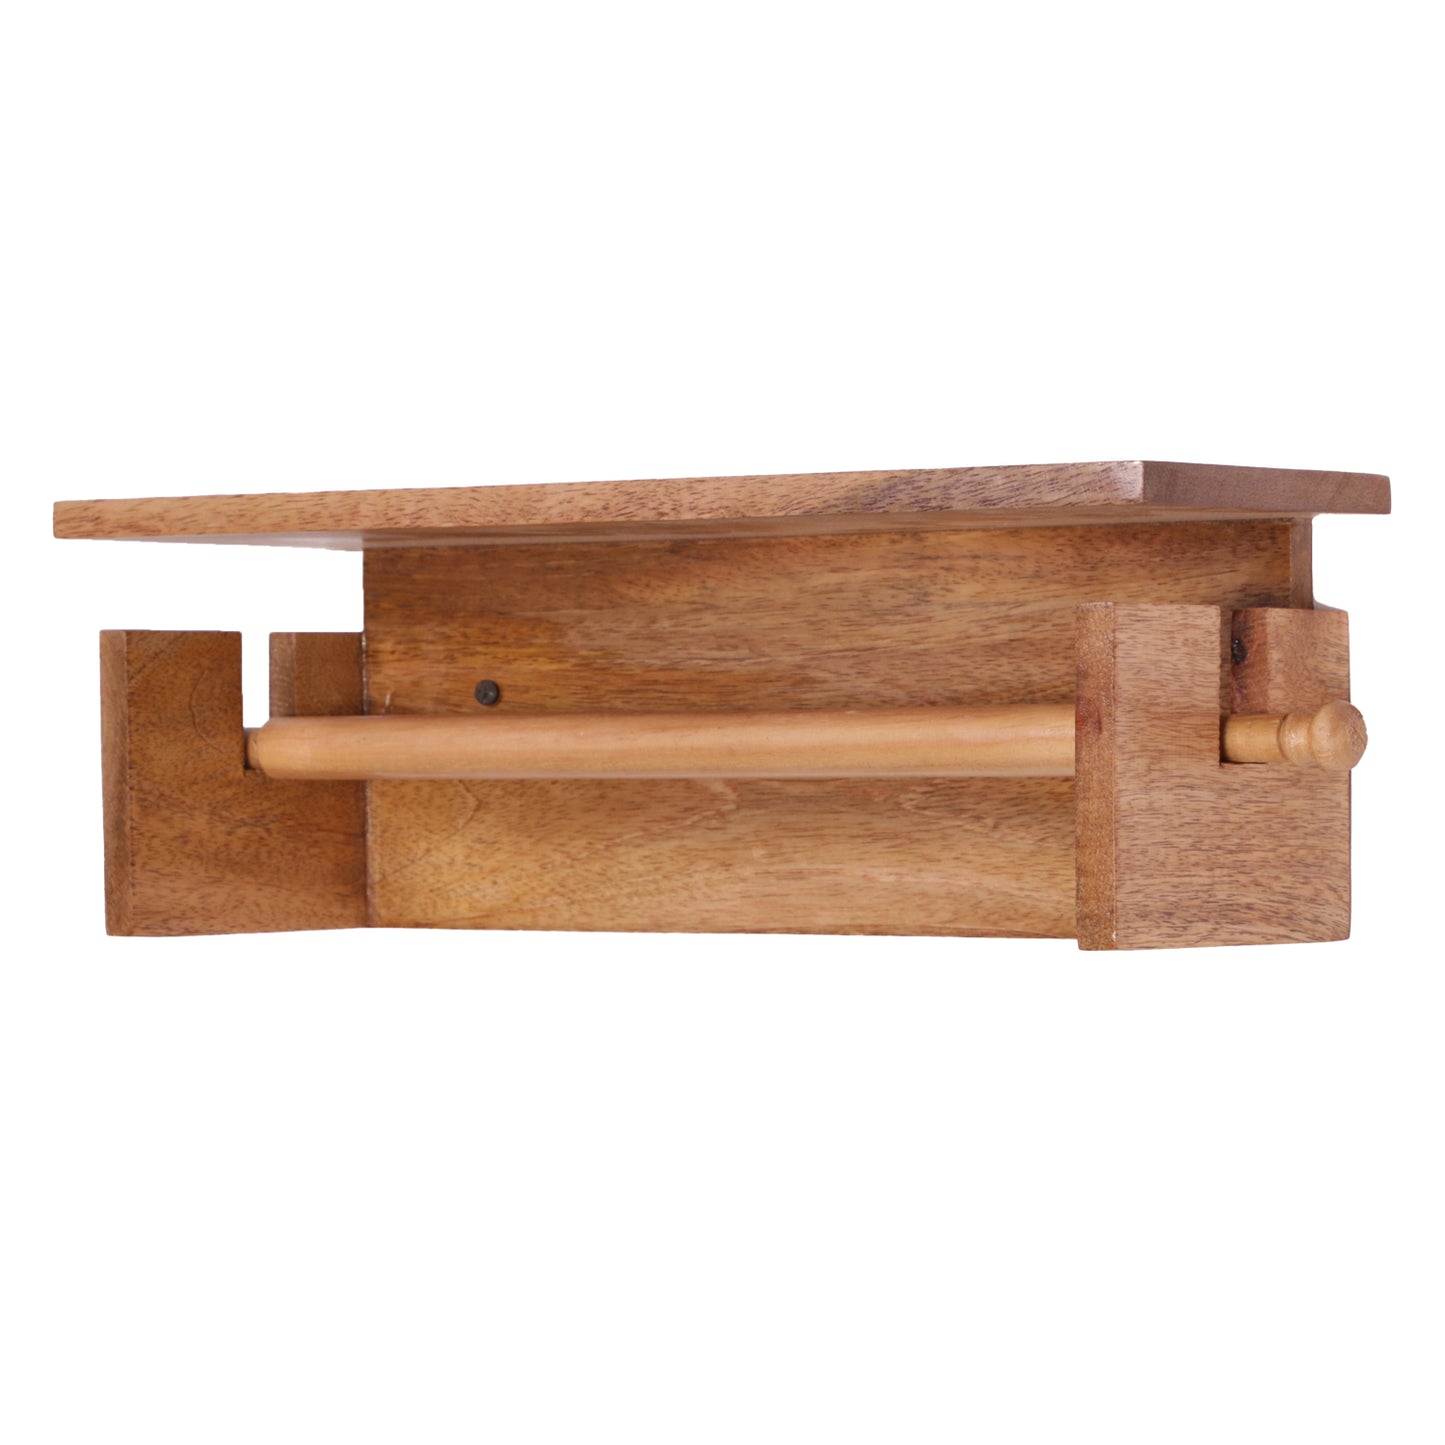 The Weaver's Nest Wooden Towel Holder/Rack with Shelf for Kitchen, Restaurants, Hotels and Bathroom